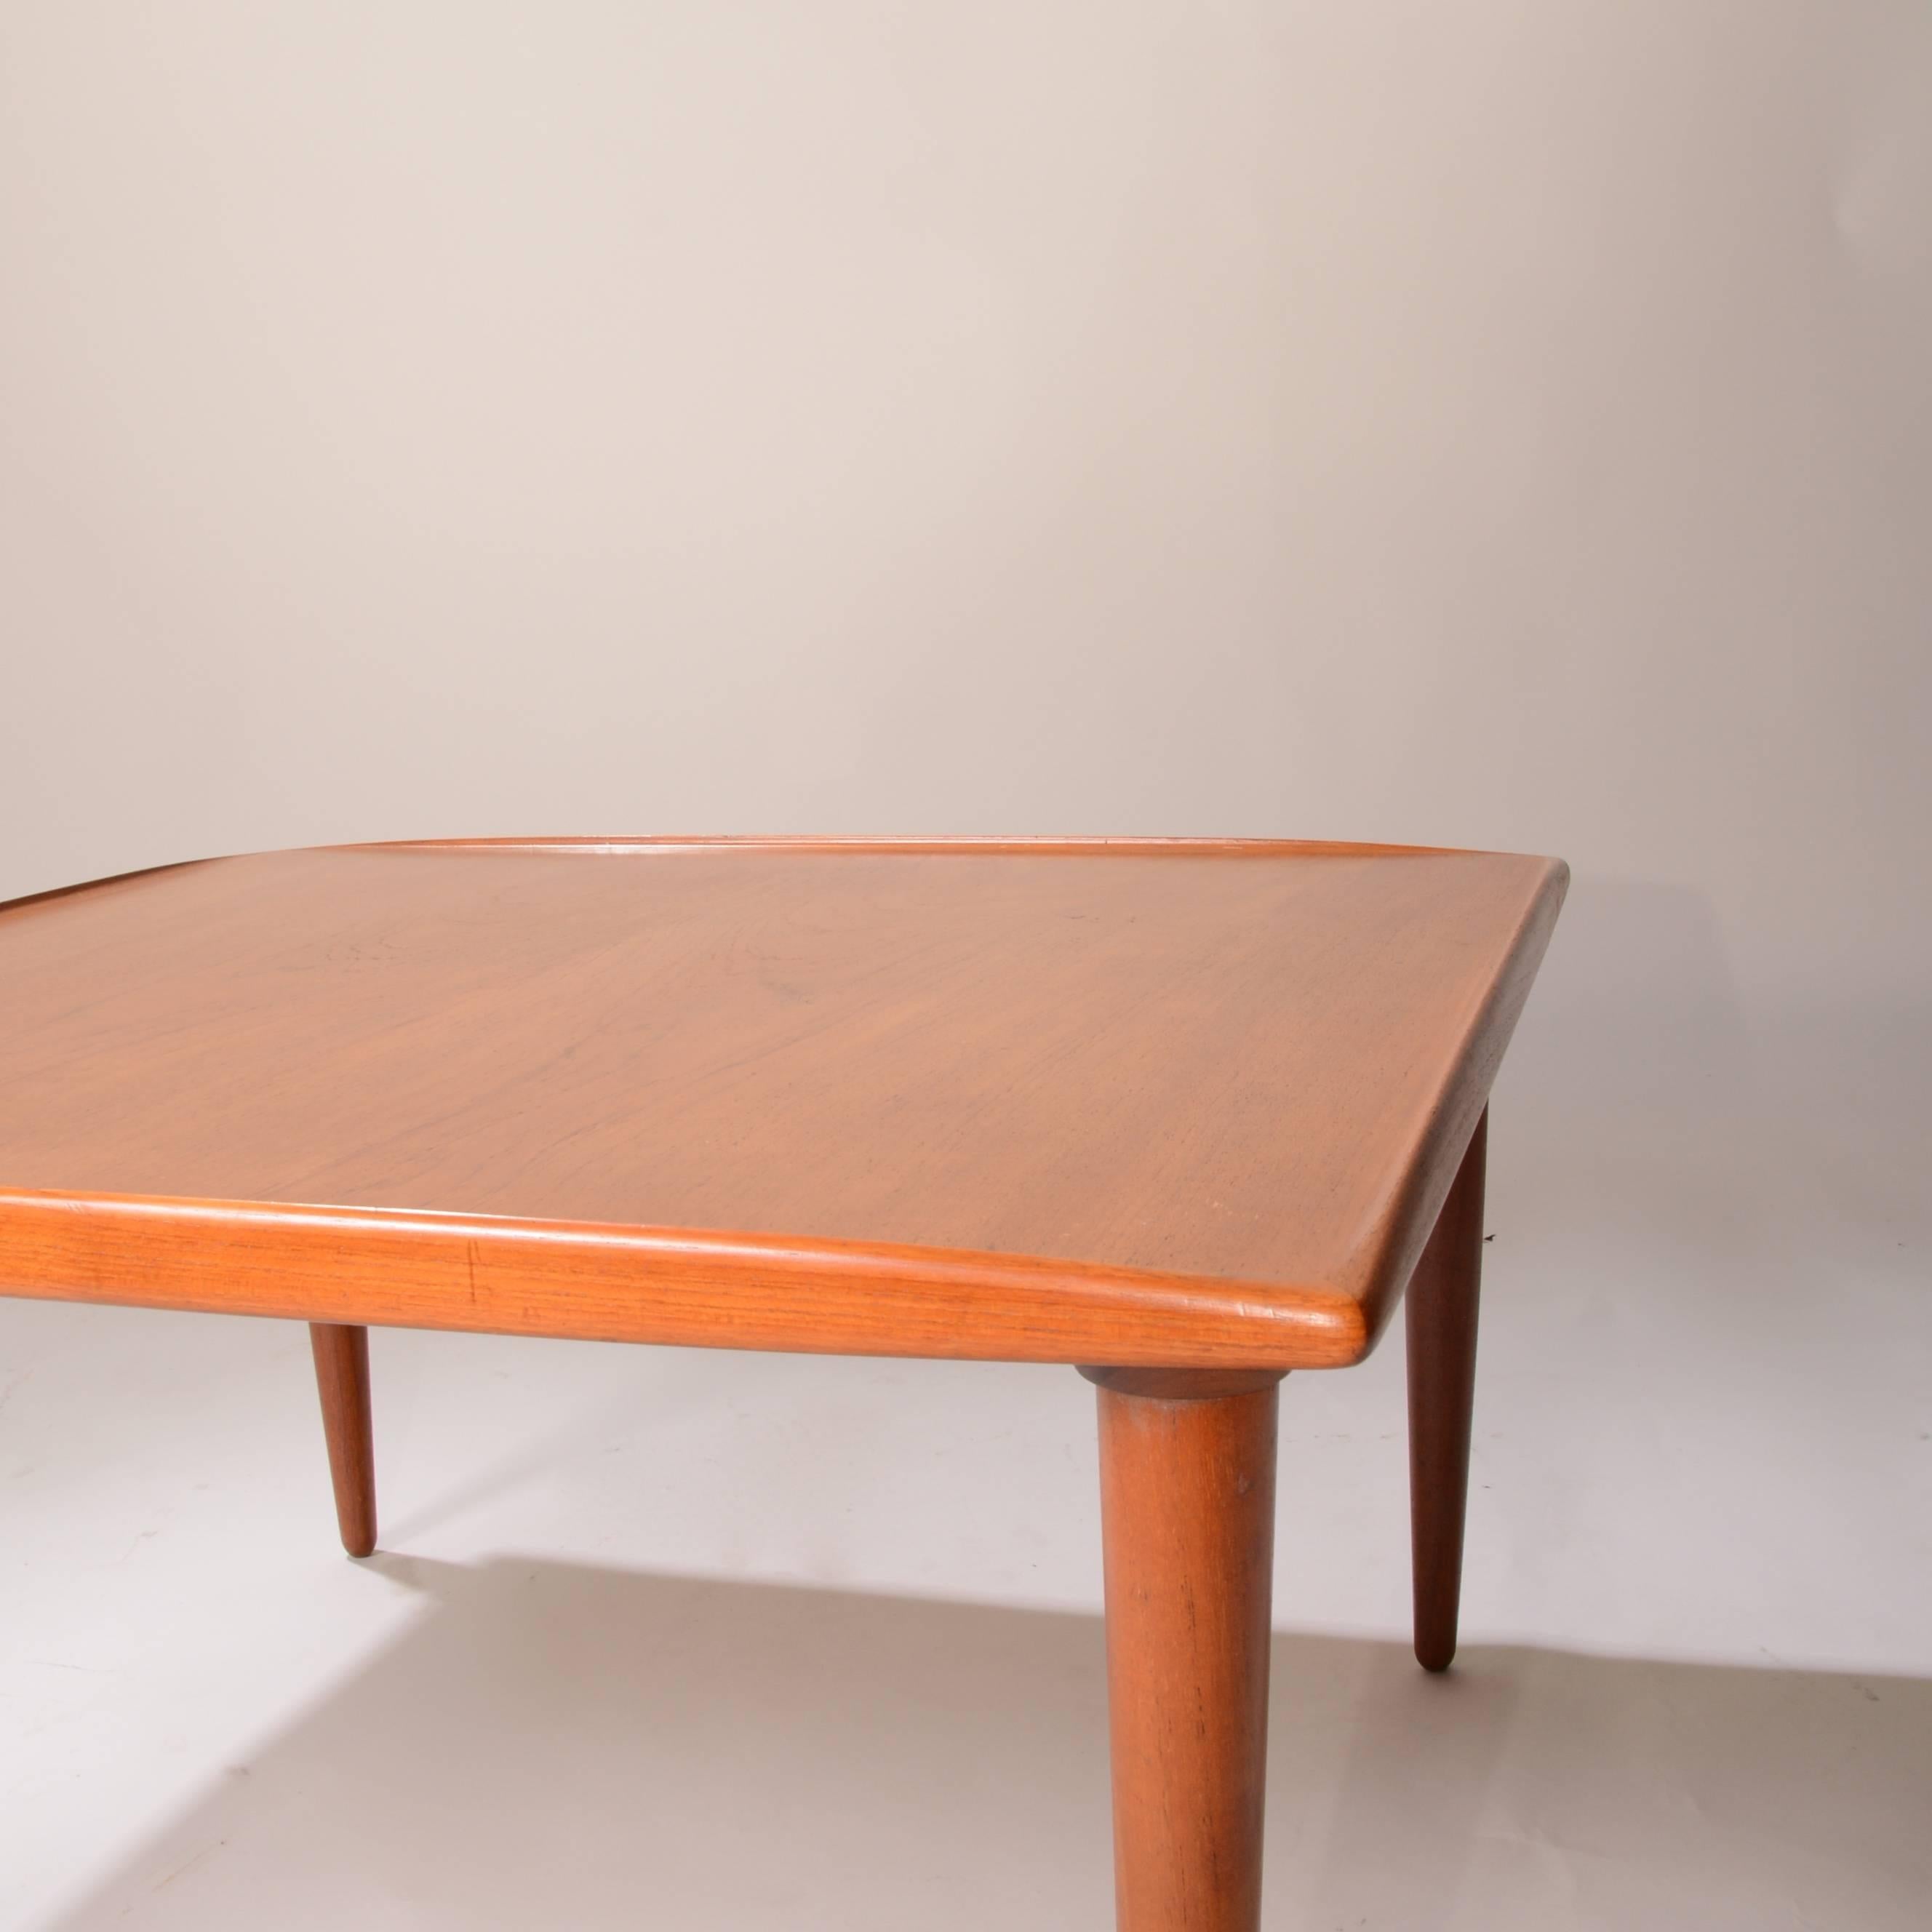 Mid-20th Century Danish Modern Square Teak Table For Sale